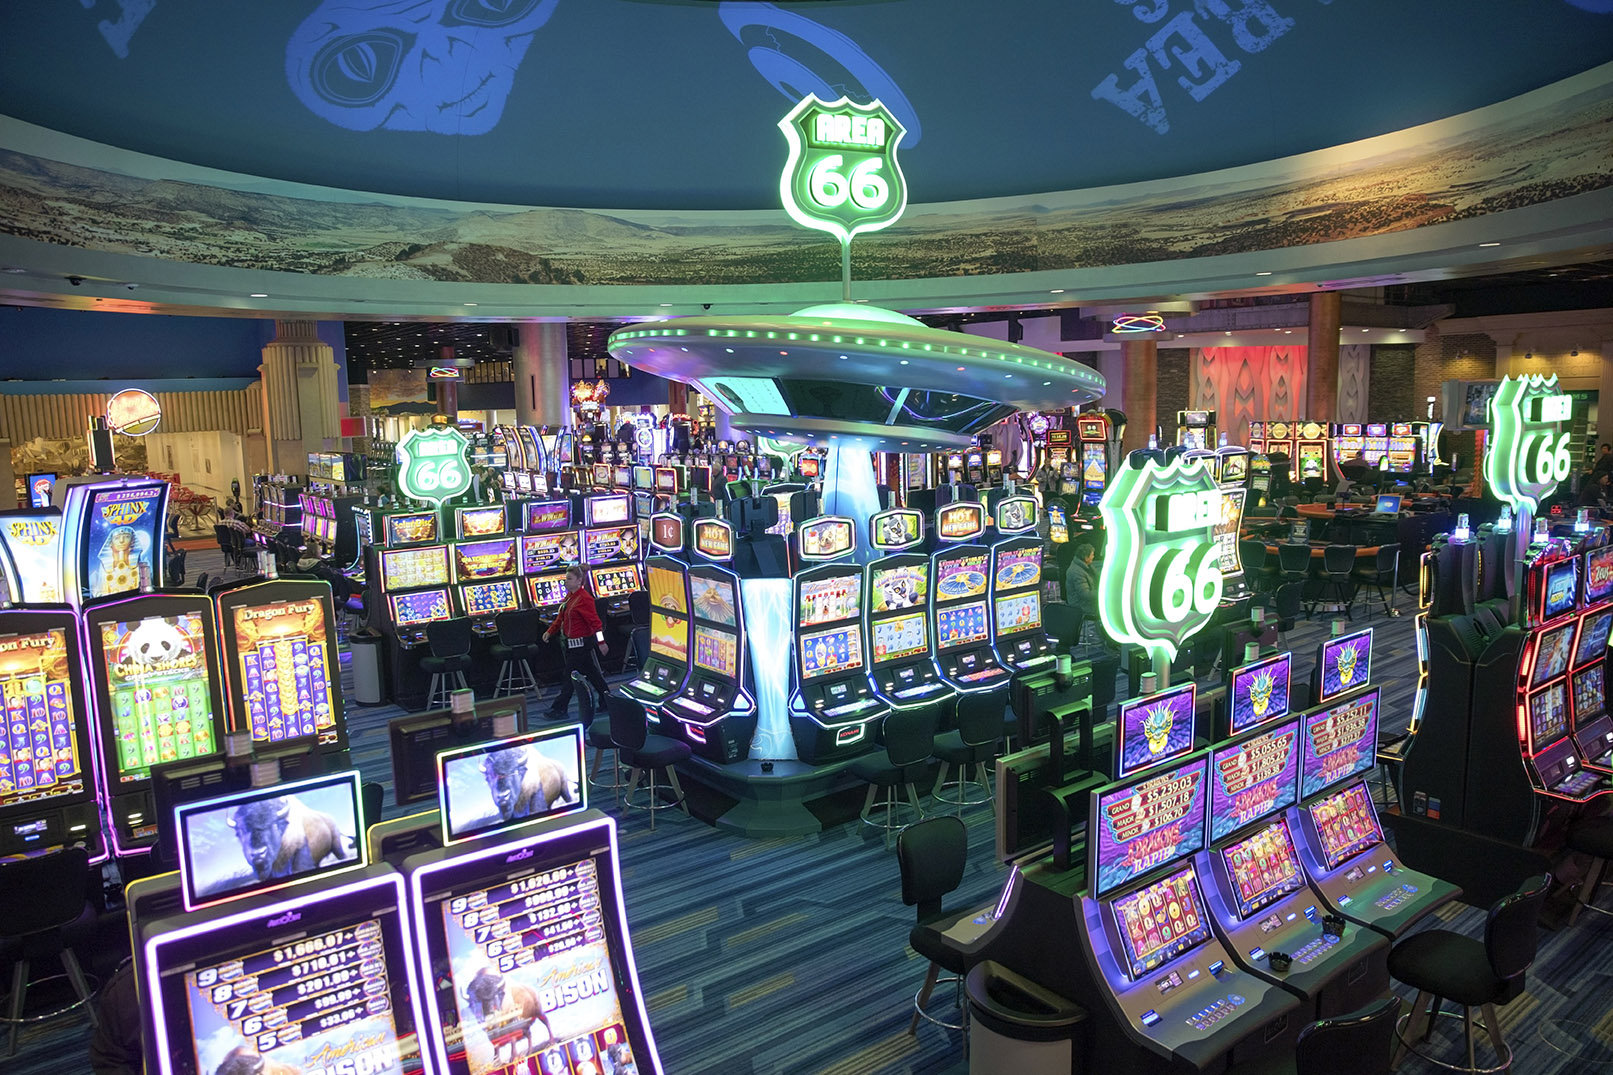 Slot machines light up a casino floor.